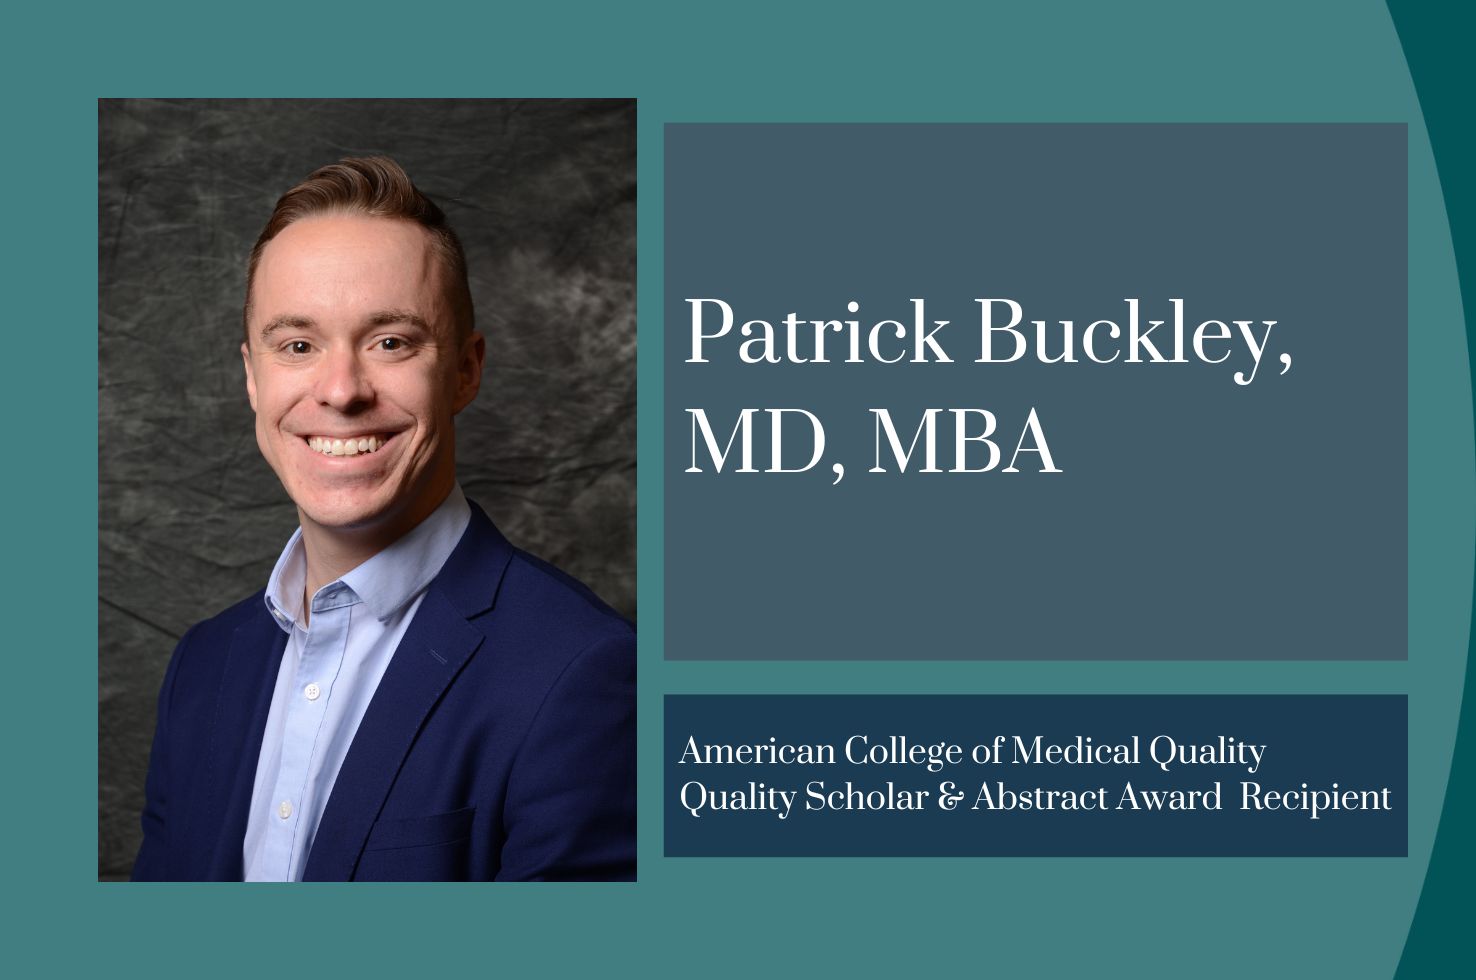 Patrick Buckley, MD, MBA (Consultation-Liaison Psychiatry Fellow